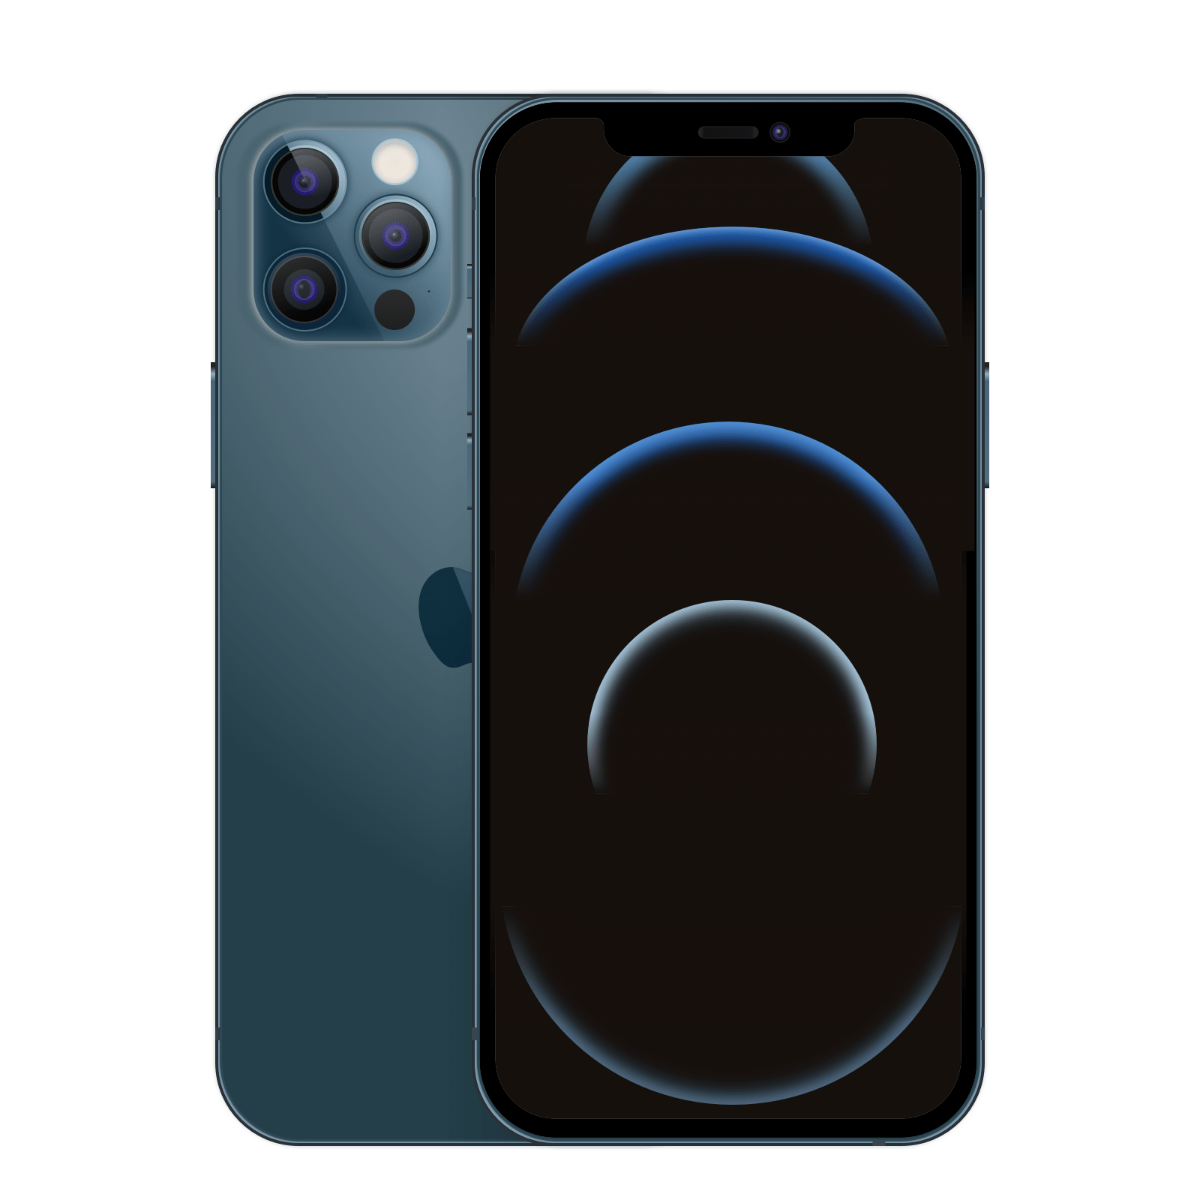 Apple iPhone 12 Pro 256 GB – Pazifikblau (Zustand: Neuwertig)